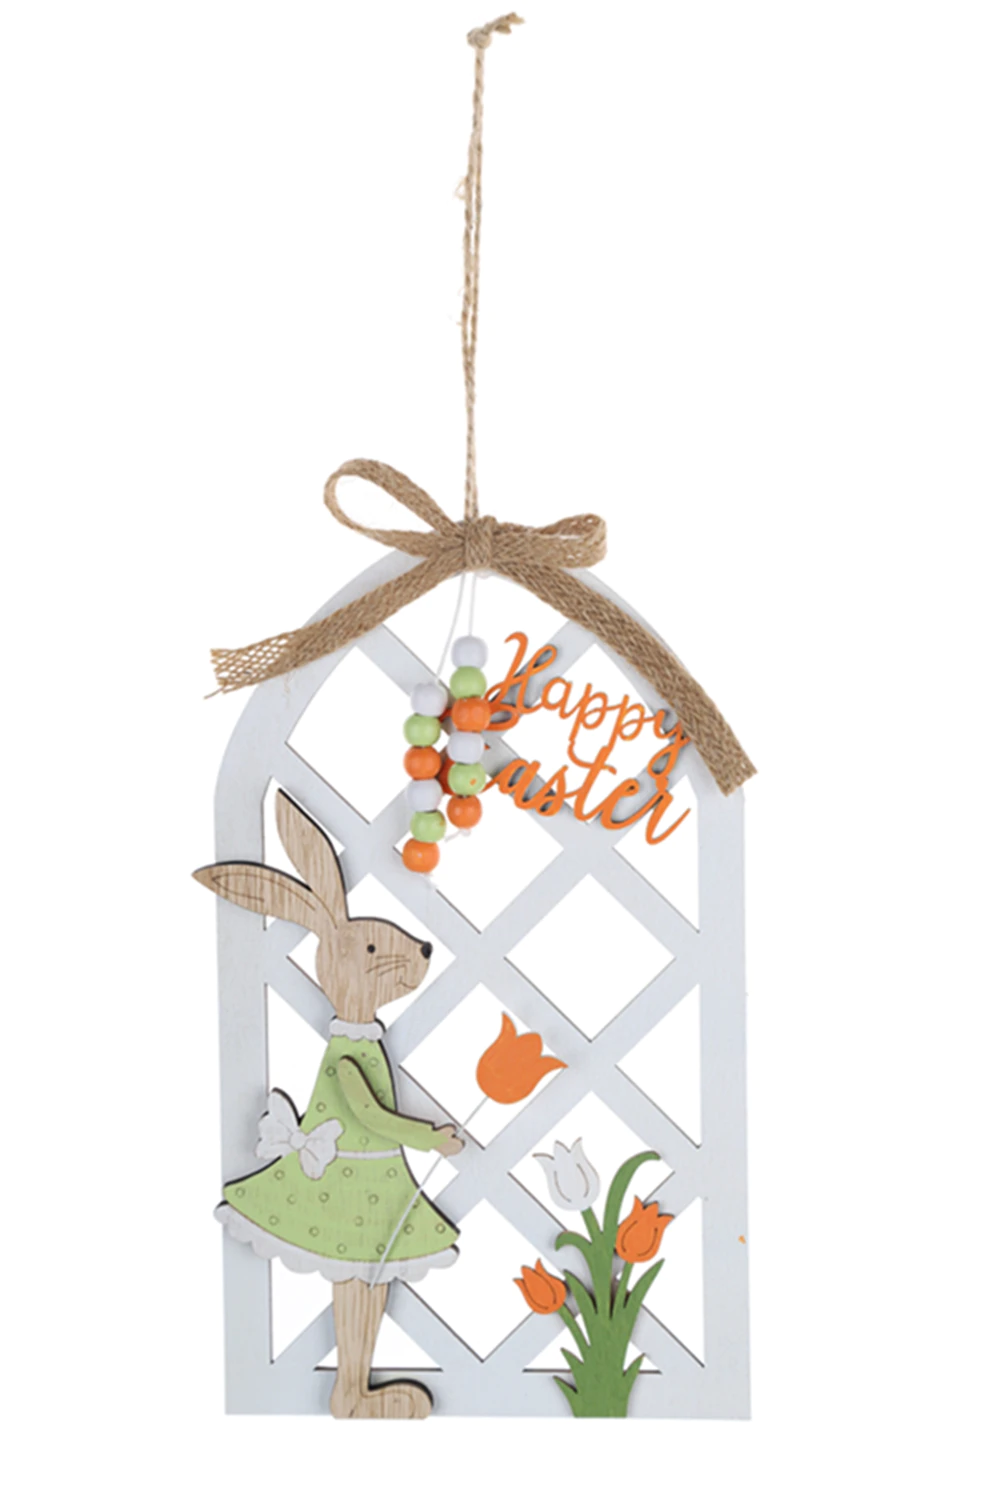 Rabbit Fence Door and Window Pendant Rabbit Plaque Decoration Easter Window Wall Party